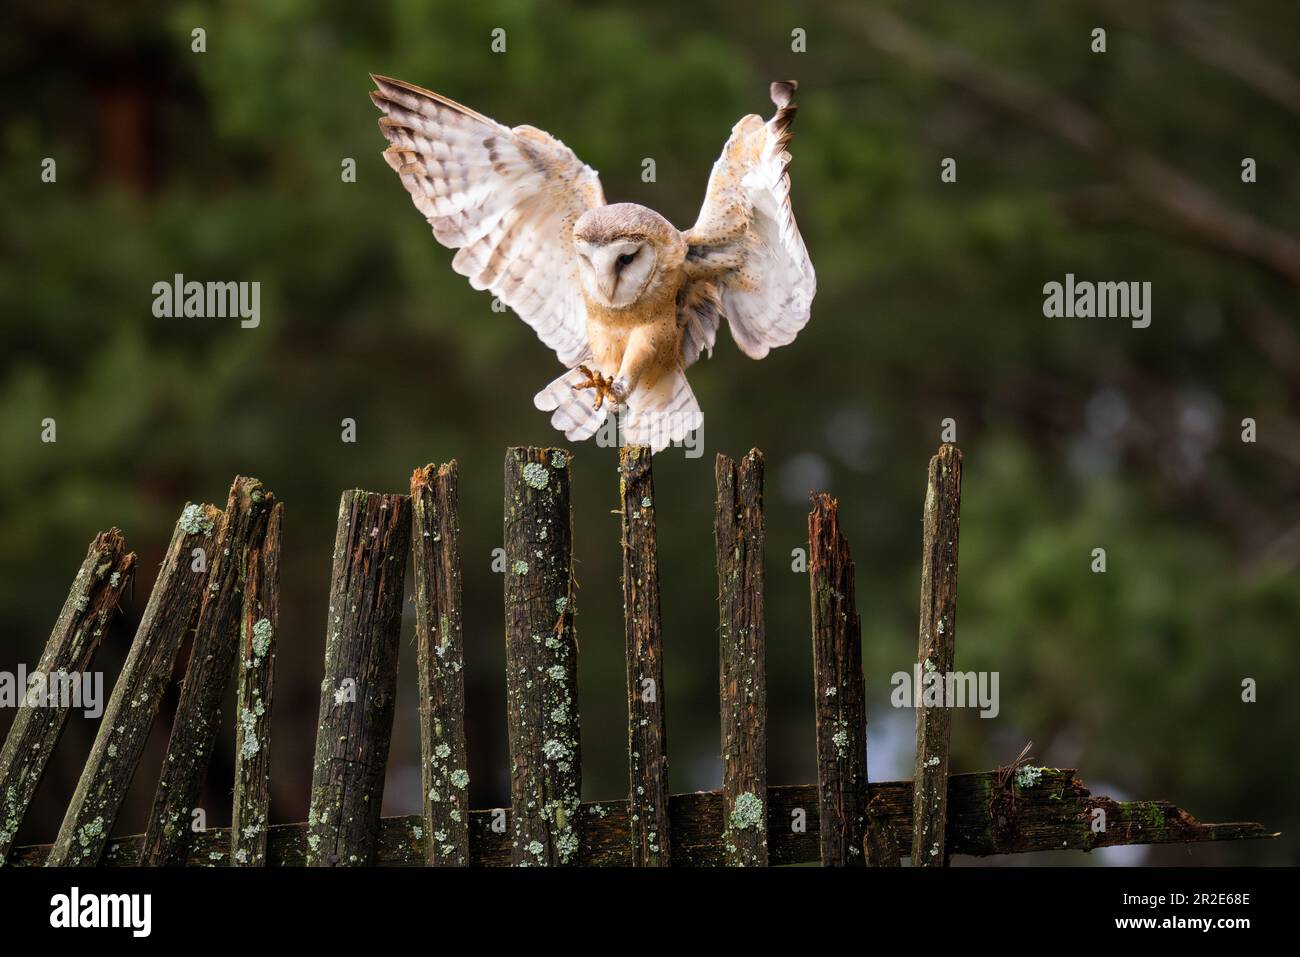 Barn Owl - Tyto alba, beautiful iconic orange owl from worldwide forests and woodlands, Czech Republic. Stock Photo